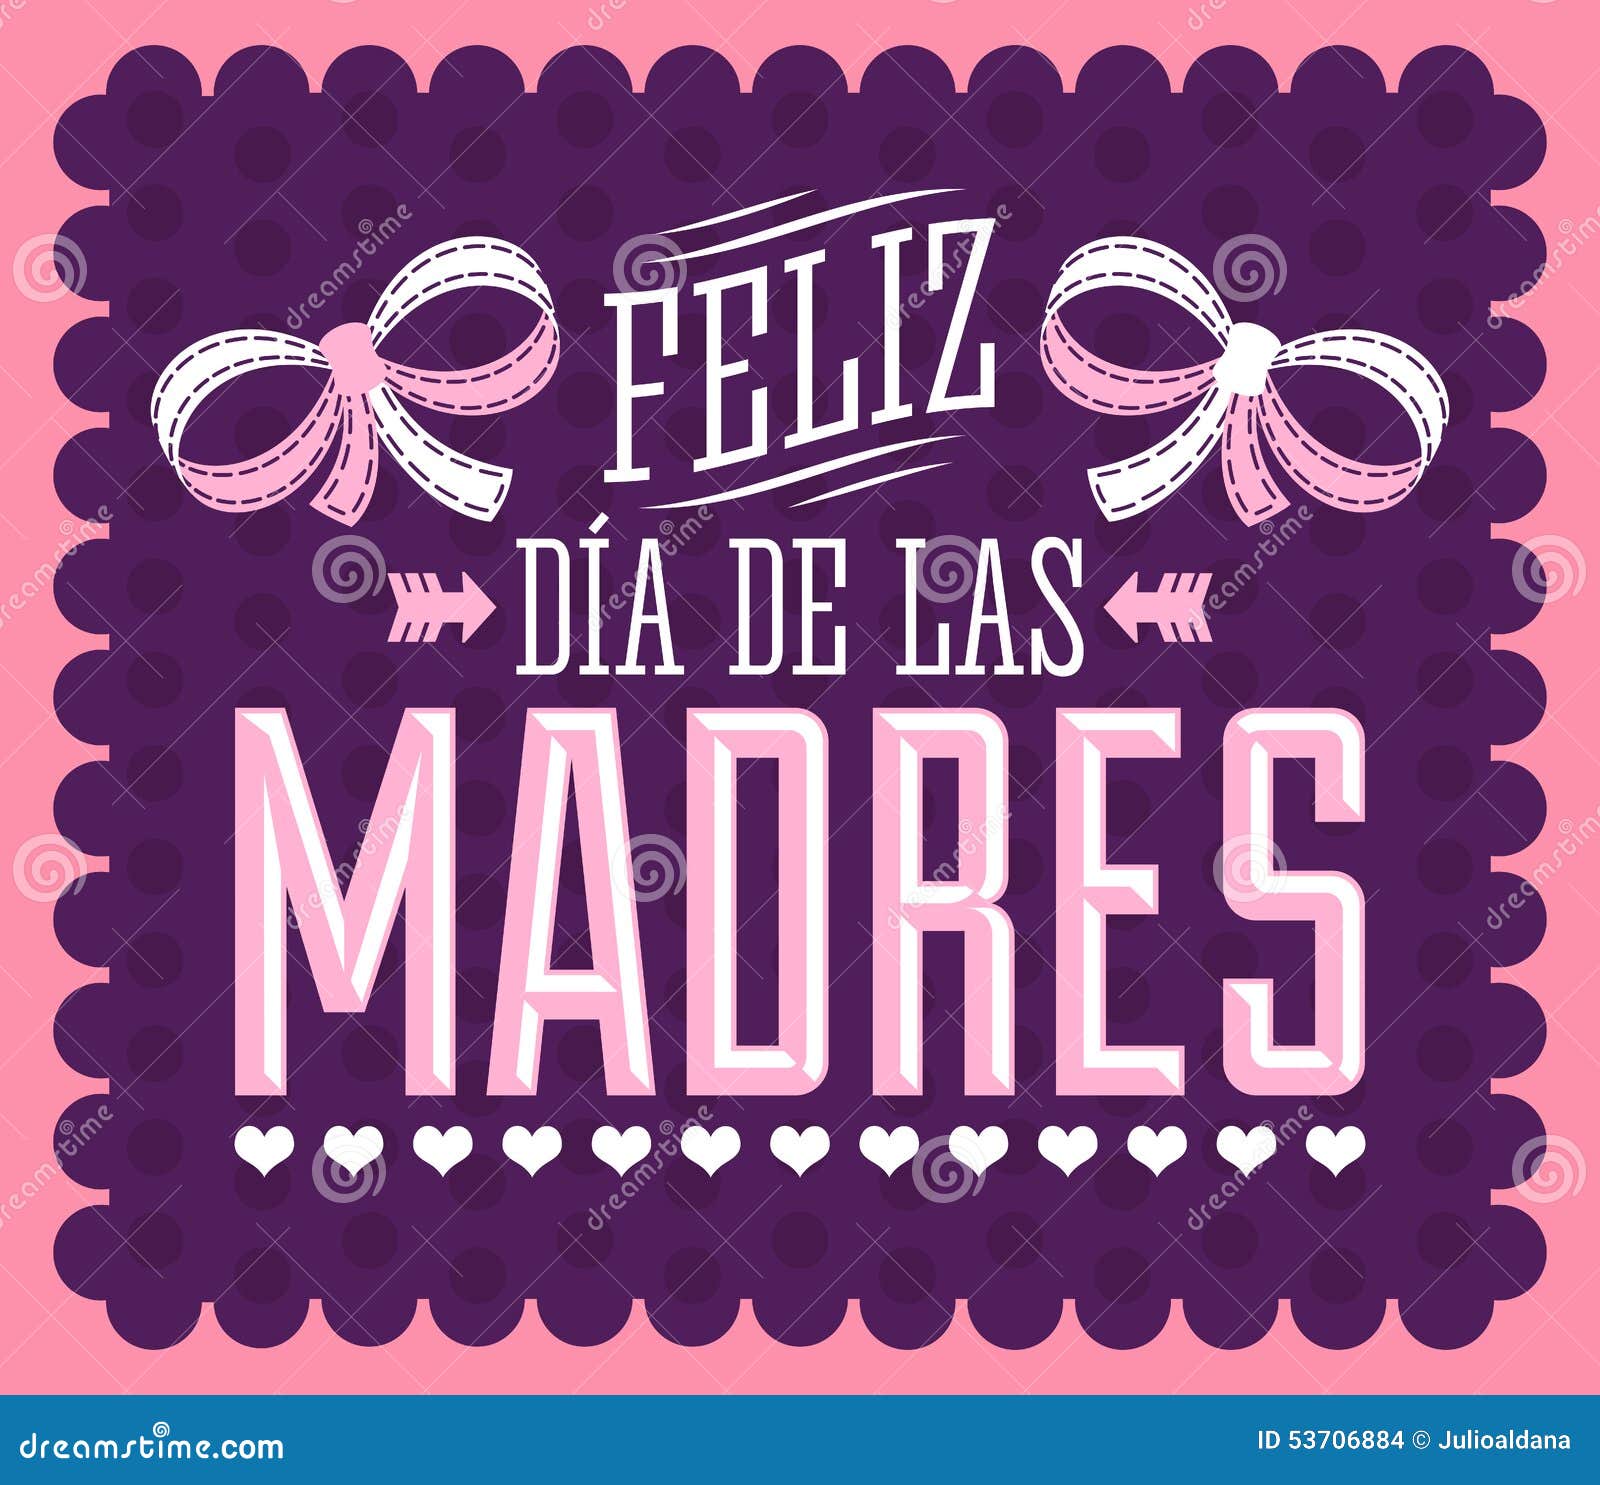 feliz dia de las madres, happy mother's day spanish text